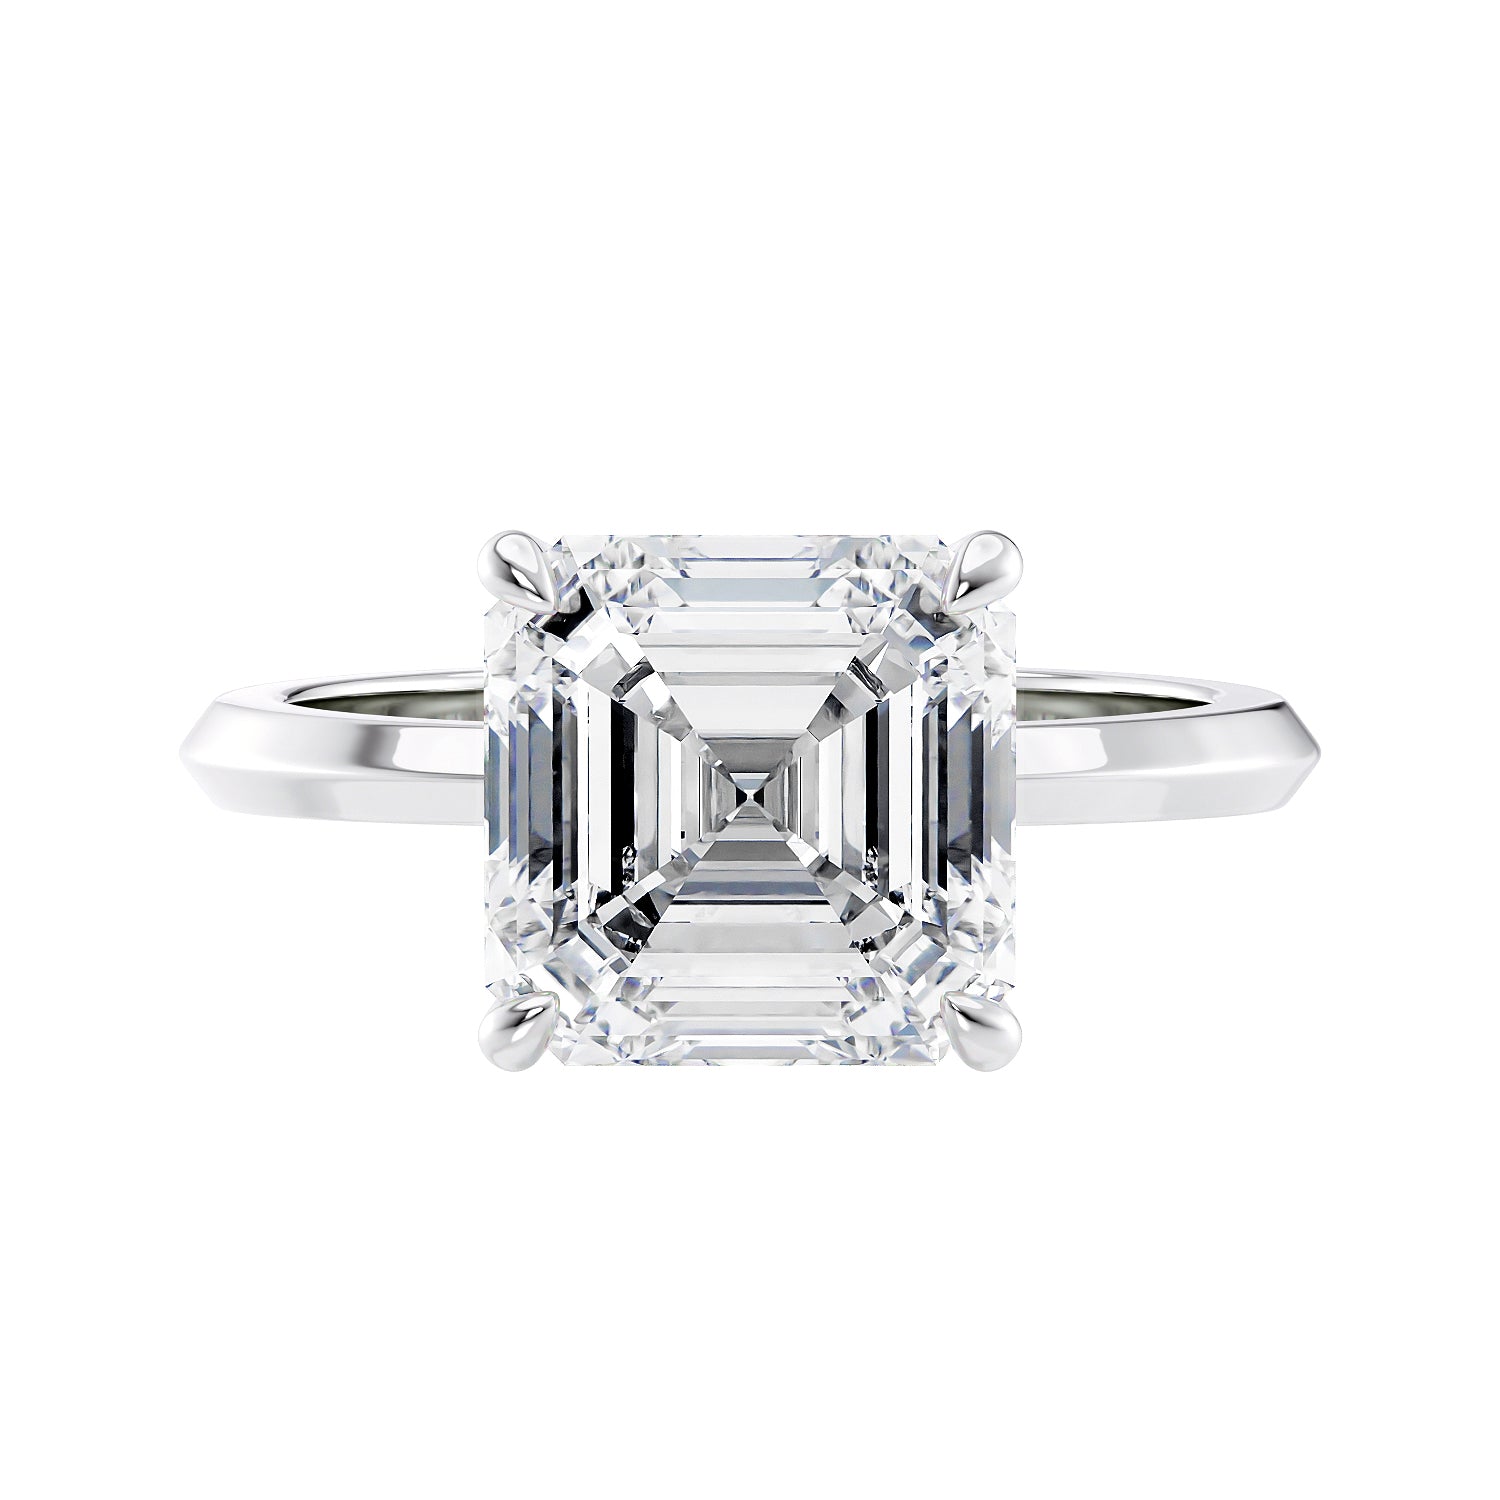 Asscher cut solitaire diamond engagement ring white gold front view.